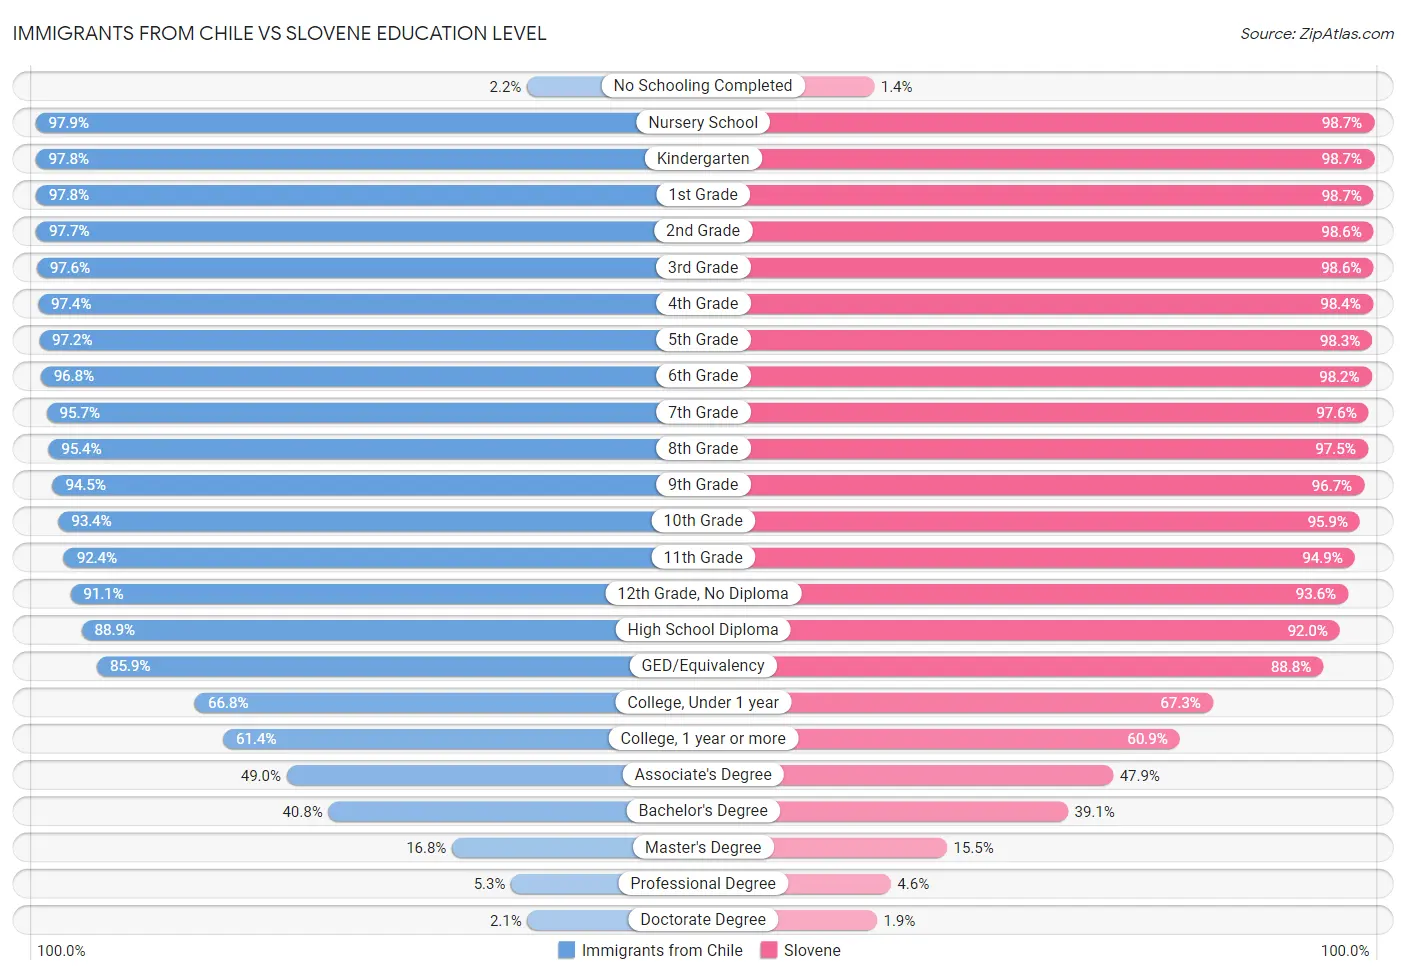 Immigrants from Chile vs Slovene Education Level